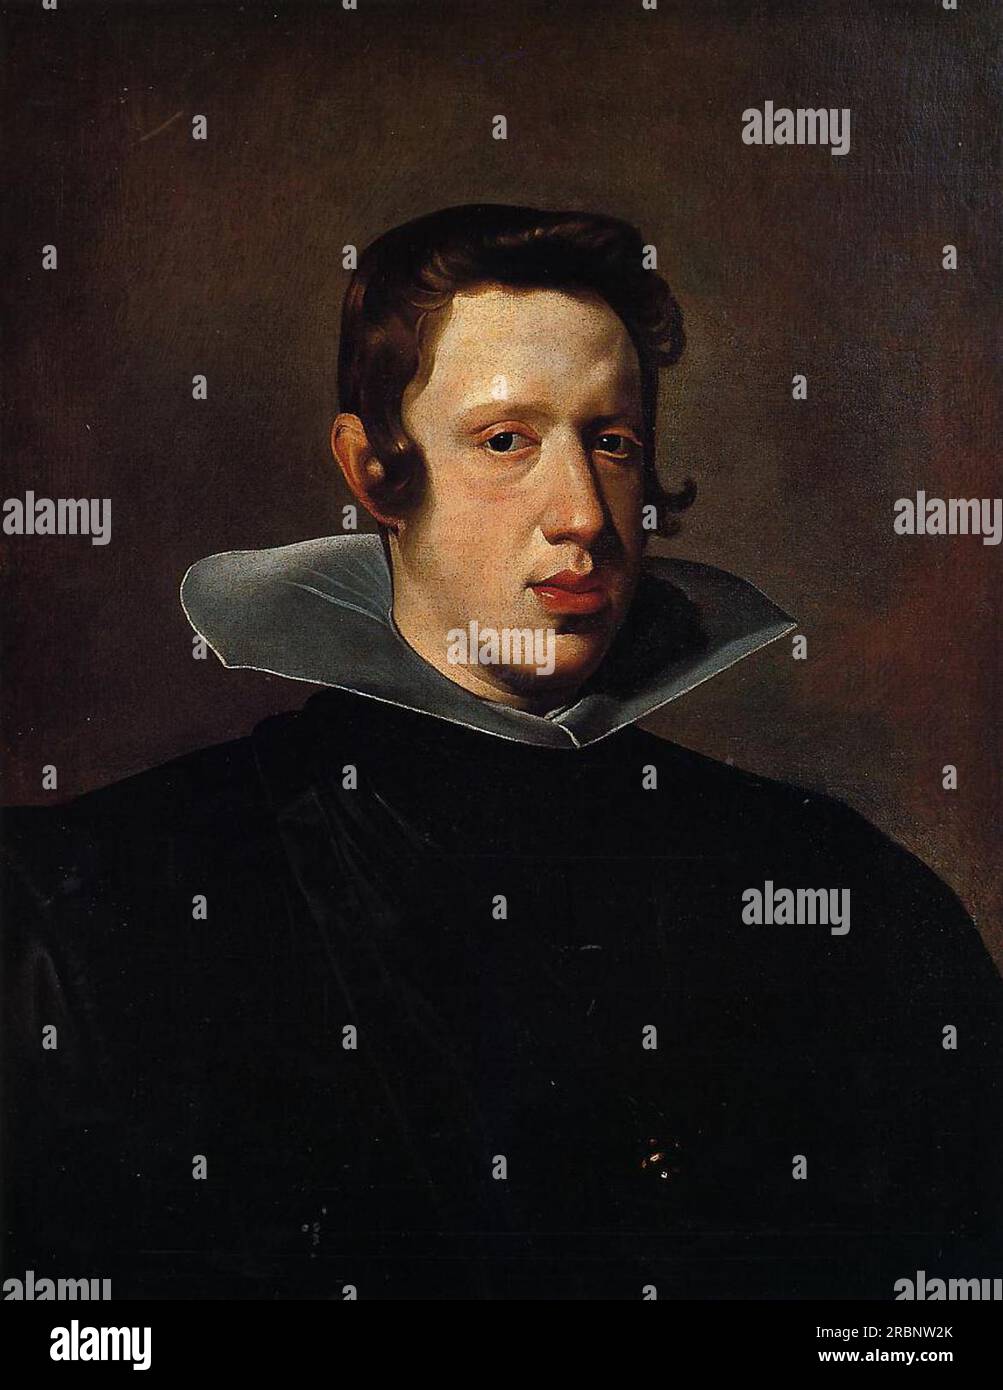 Philip IV 1624 by Diego Velazquez Stock Photo